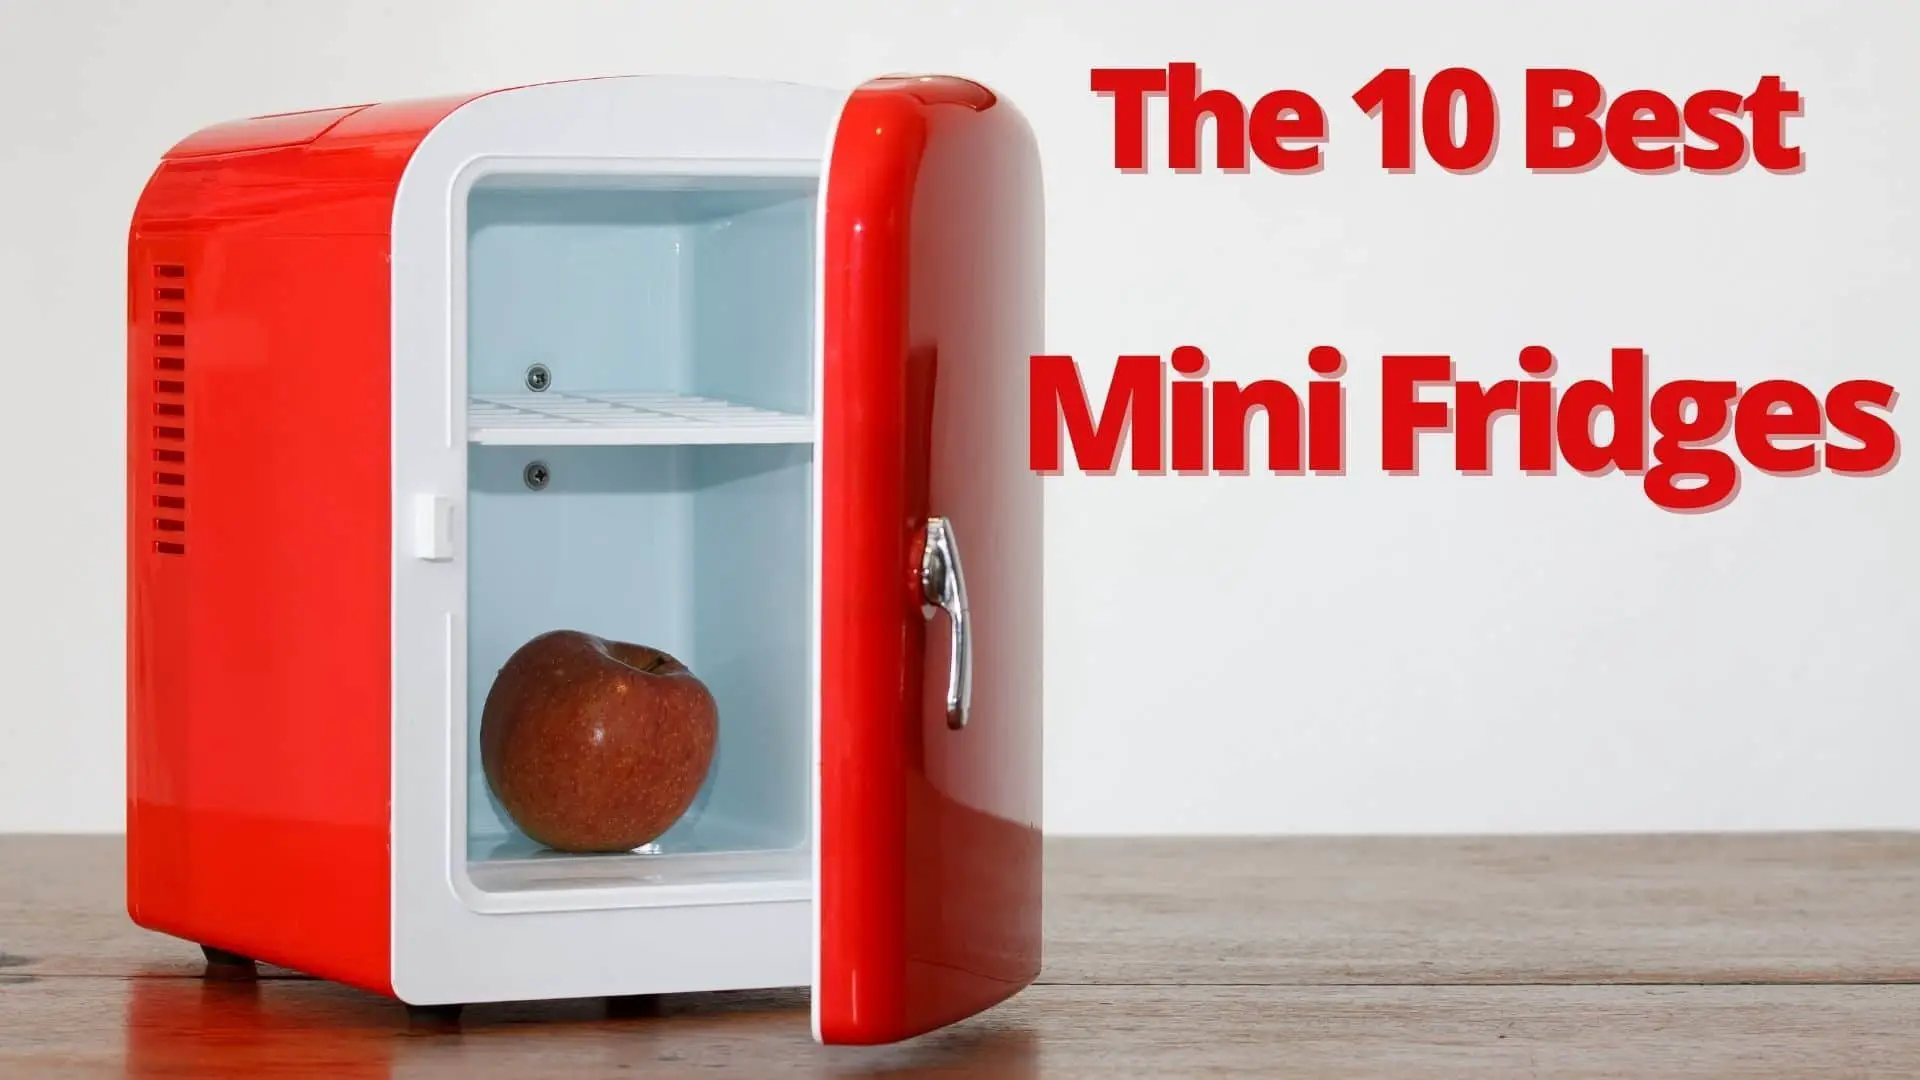 The 10 Best Mini Fridges 2020 - Cheap Small Refrigerator